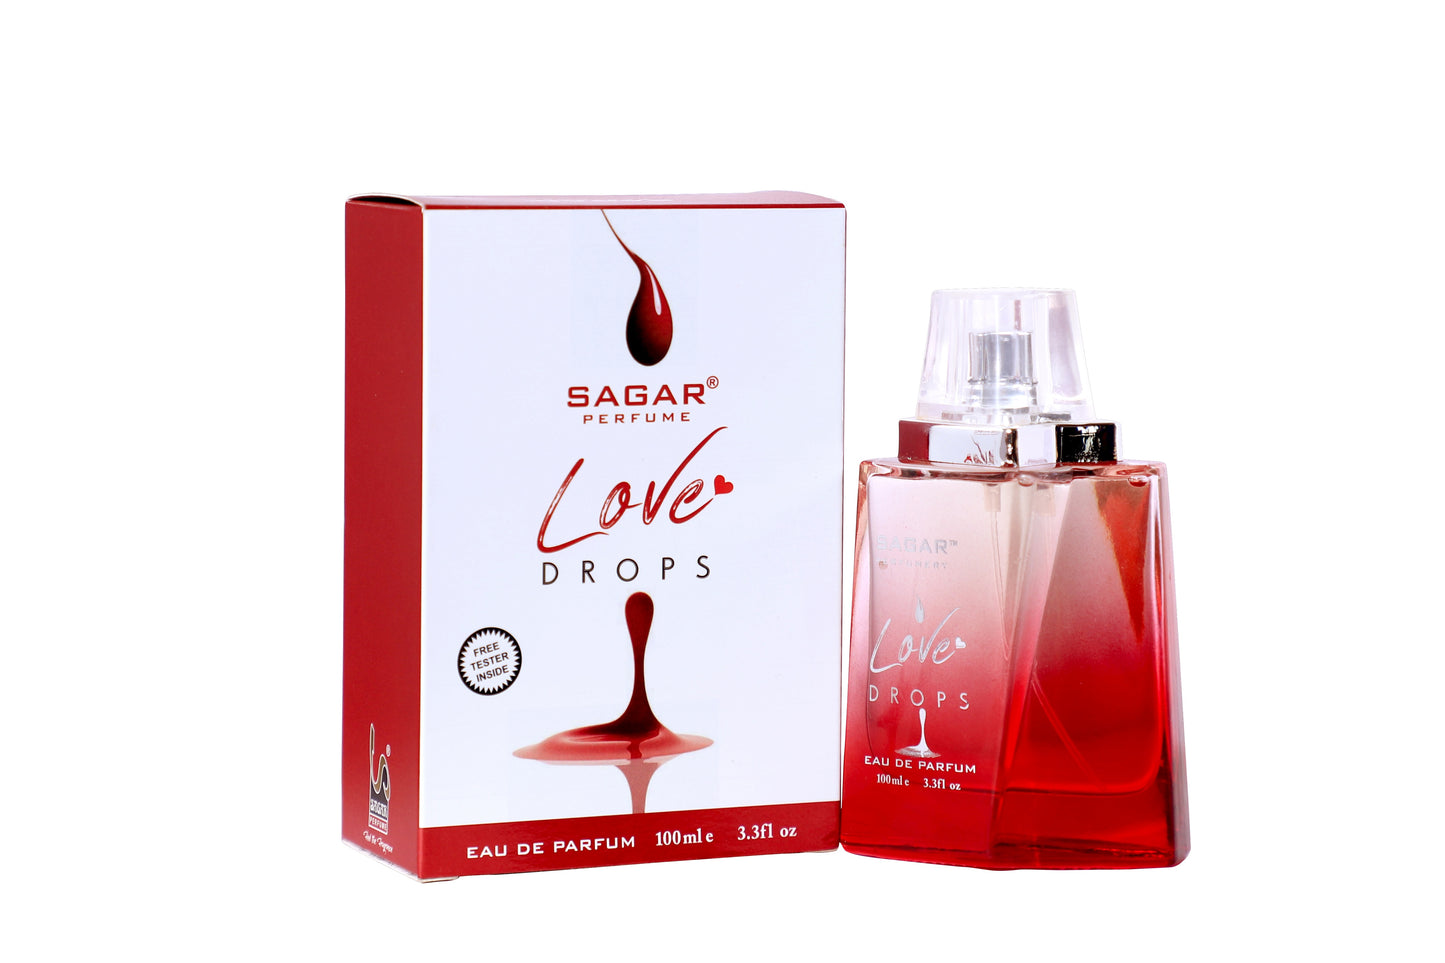 Sagar Love Drops Deodorant And Perfume Combo